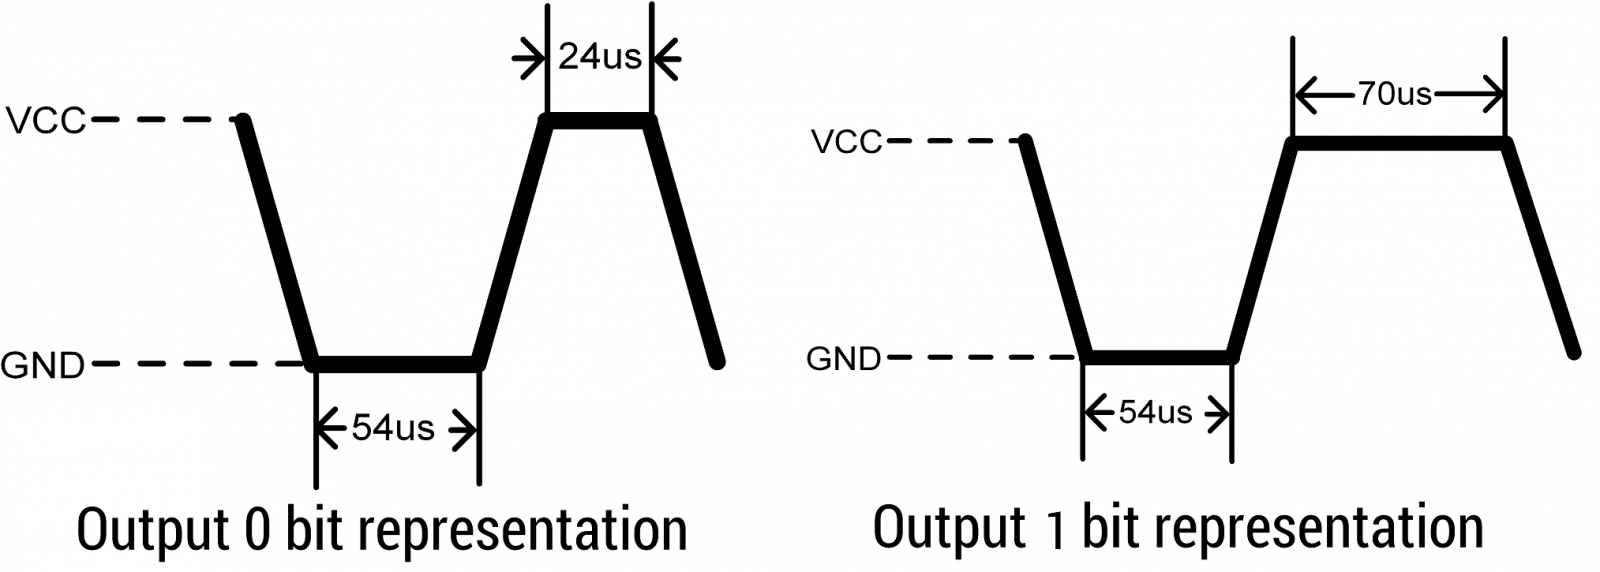 DHT11 Output bit representation